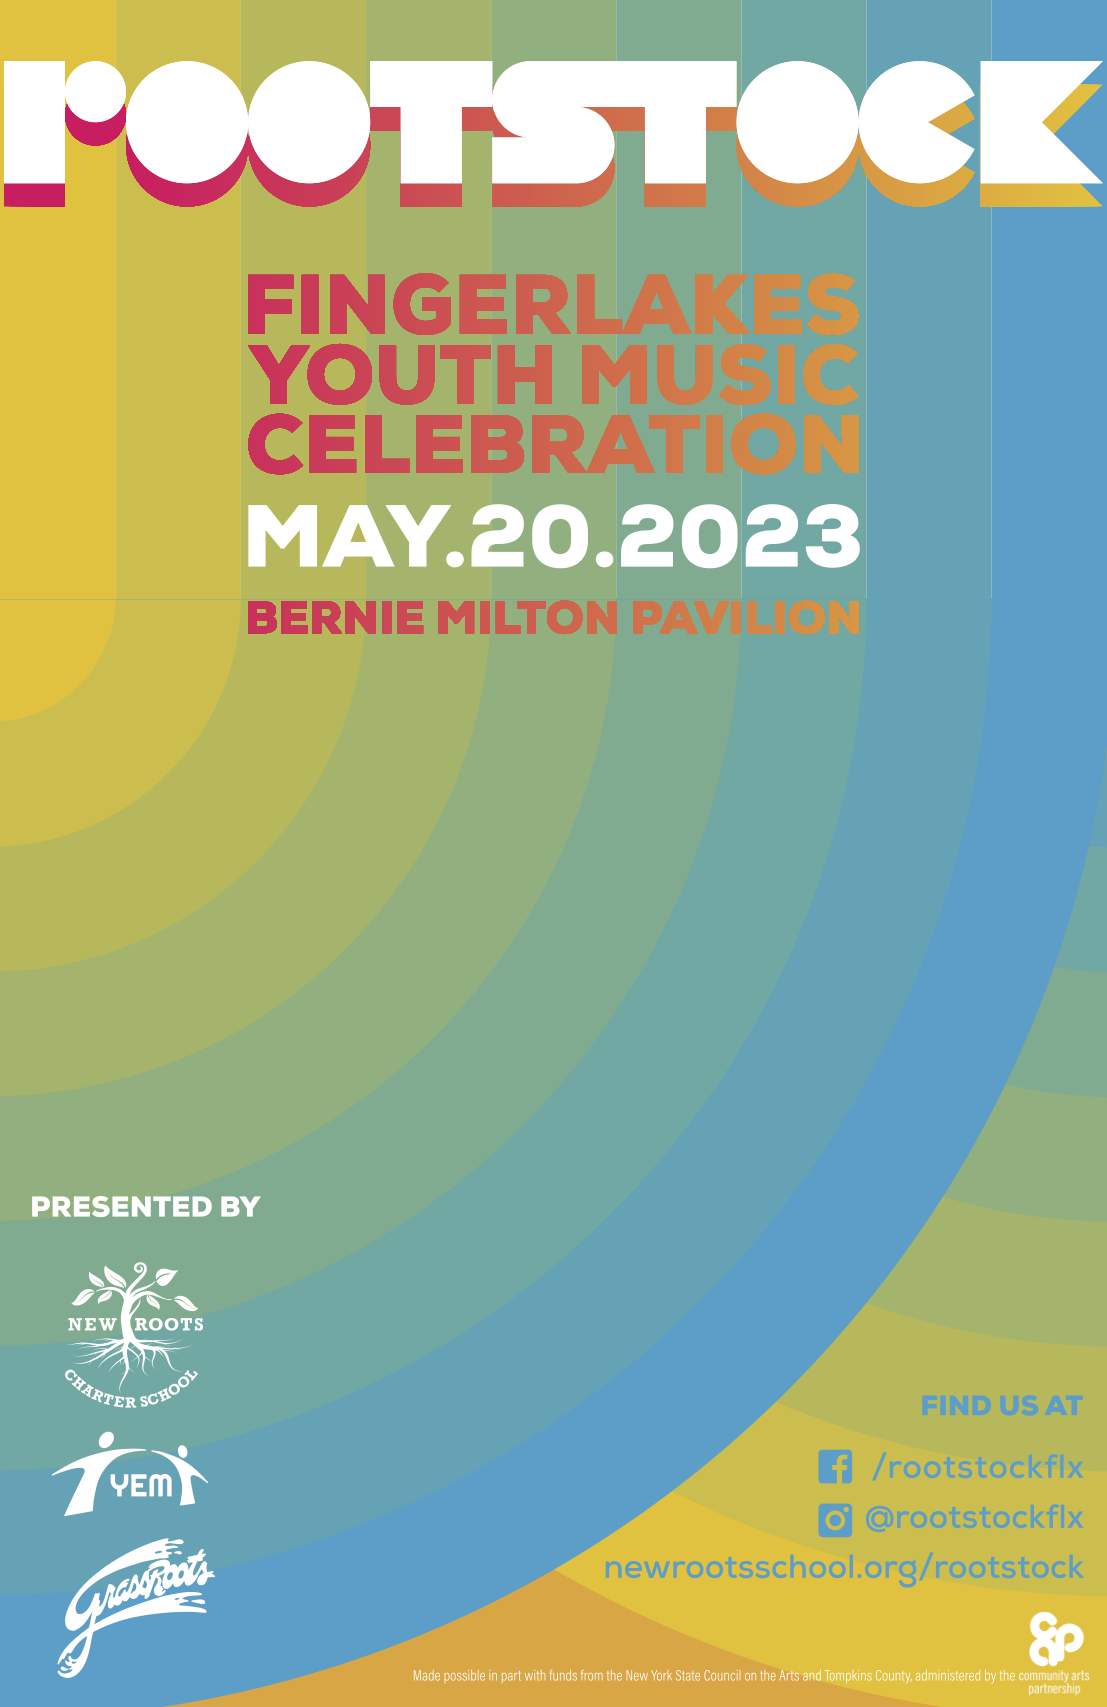 Rootstock Youth Music Celebration & YEM (Youth Entrepreneurship Market) Return to the Bernie Milton Pavilion stage on May 20th